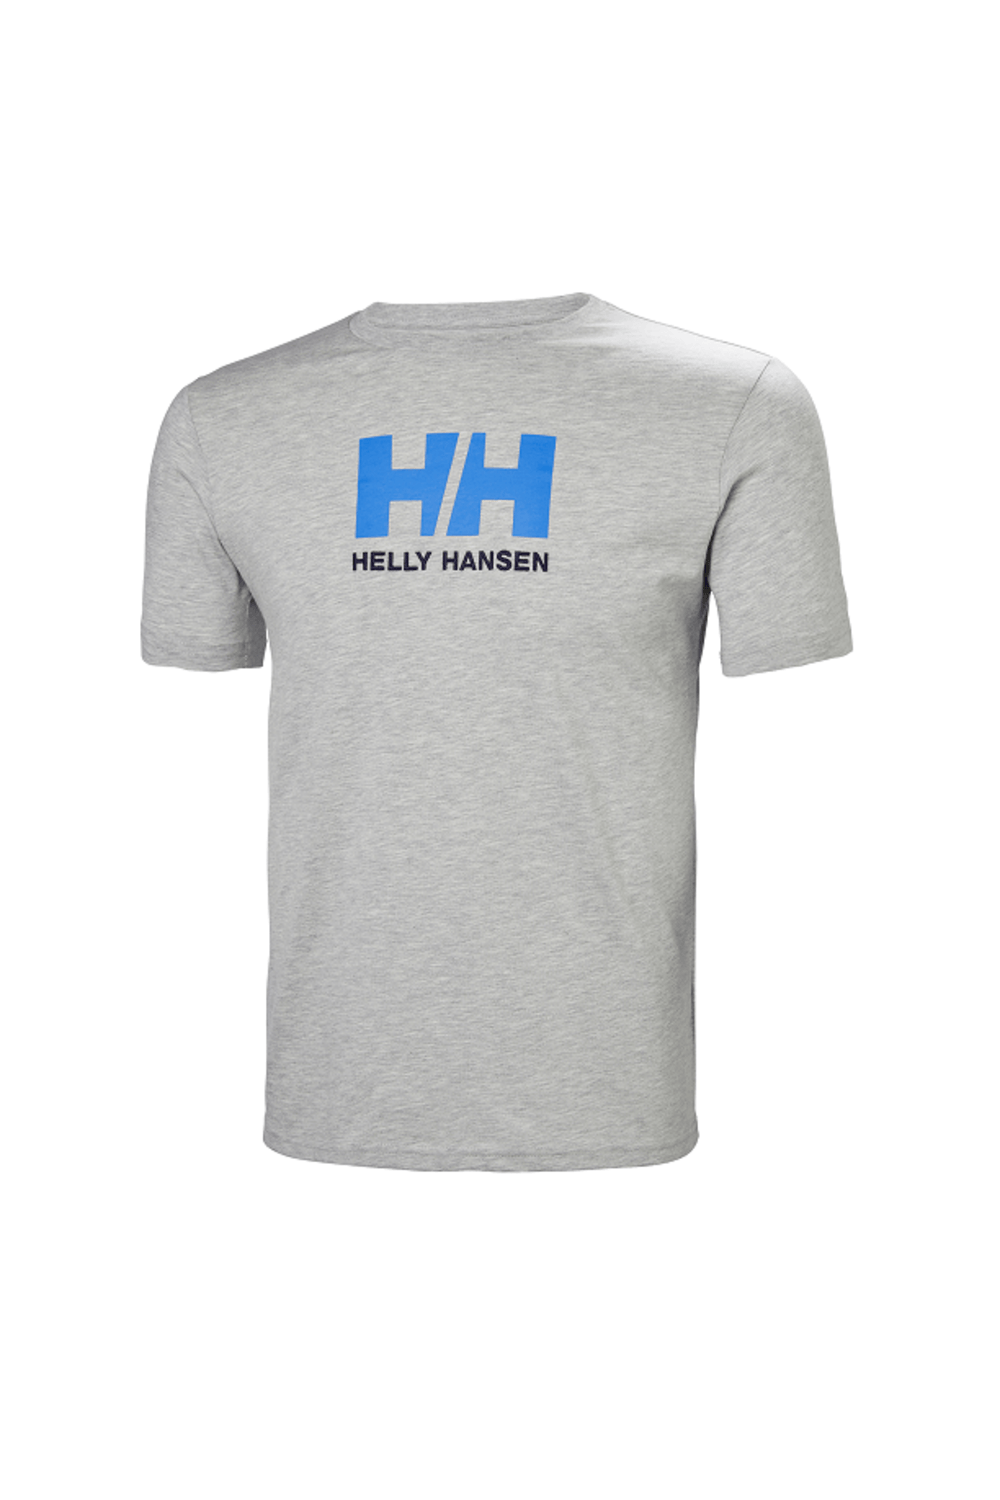 HH Logo - Hh Logo Tshirt - Helly Hansen AS - T-shirts